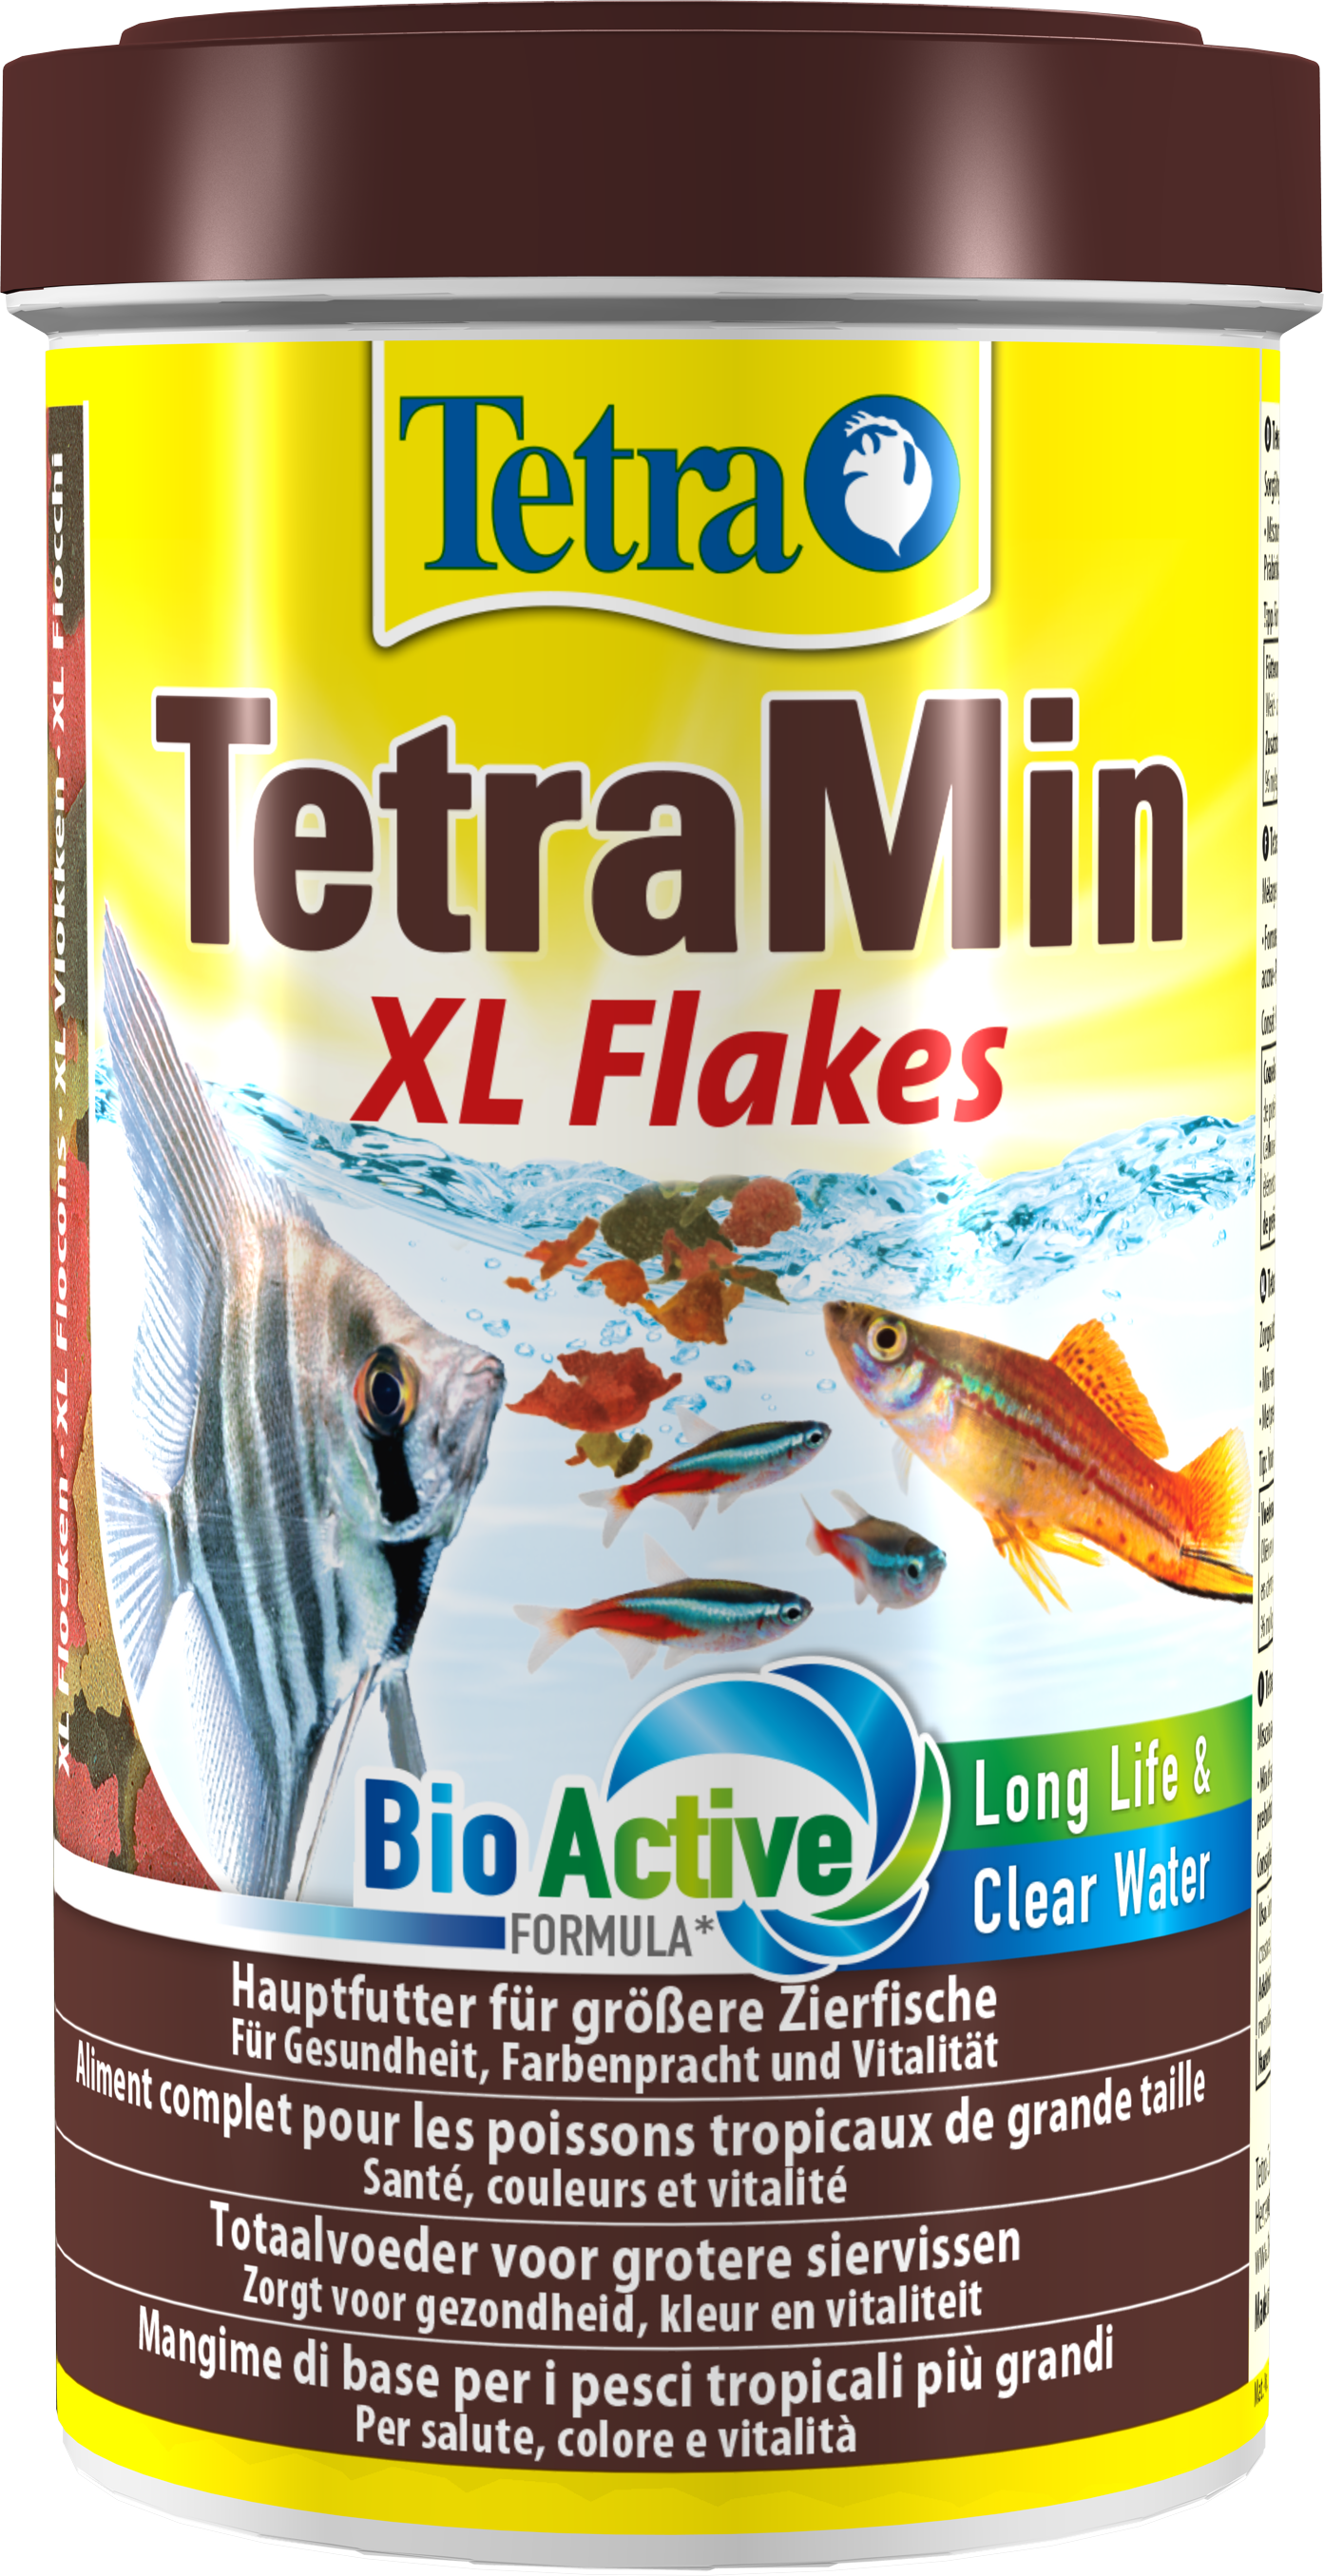 TETRA Goldfish Flocons - 10 Litres